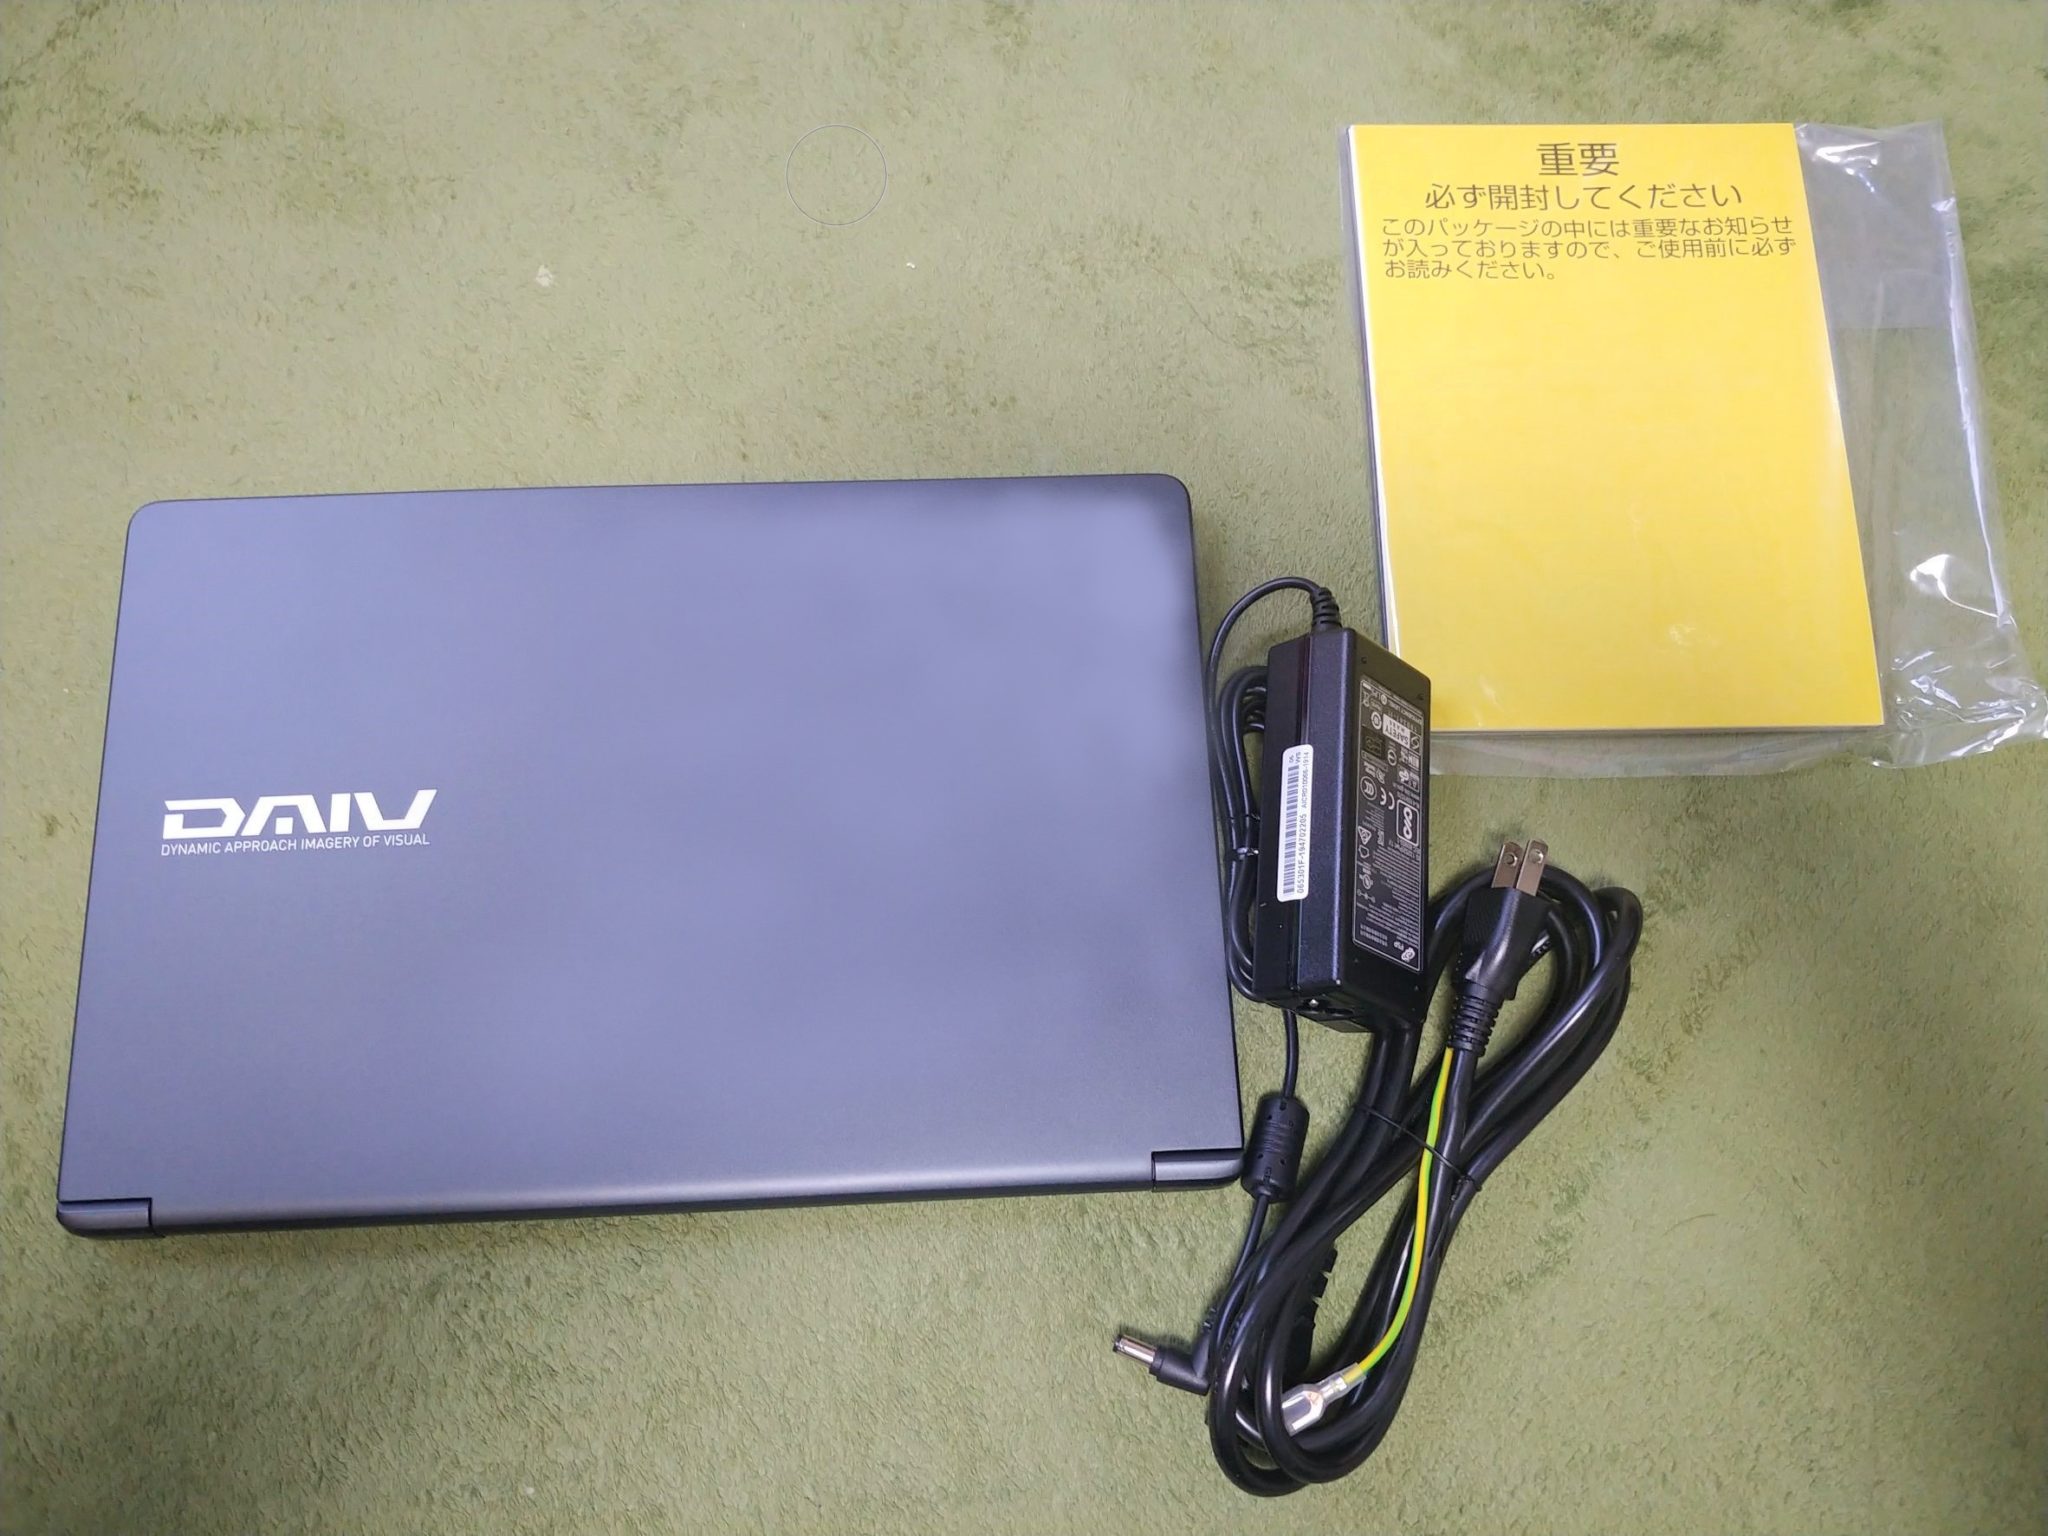 daiv 4n メモリ32GB i7-1165g7 GTX 1650Ti - Windowsノート本体